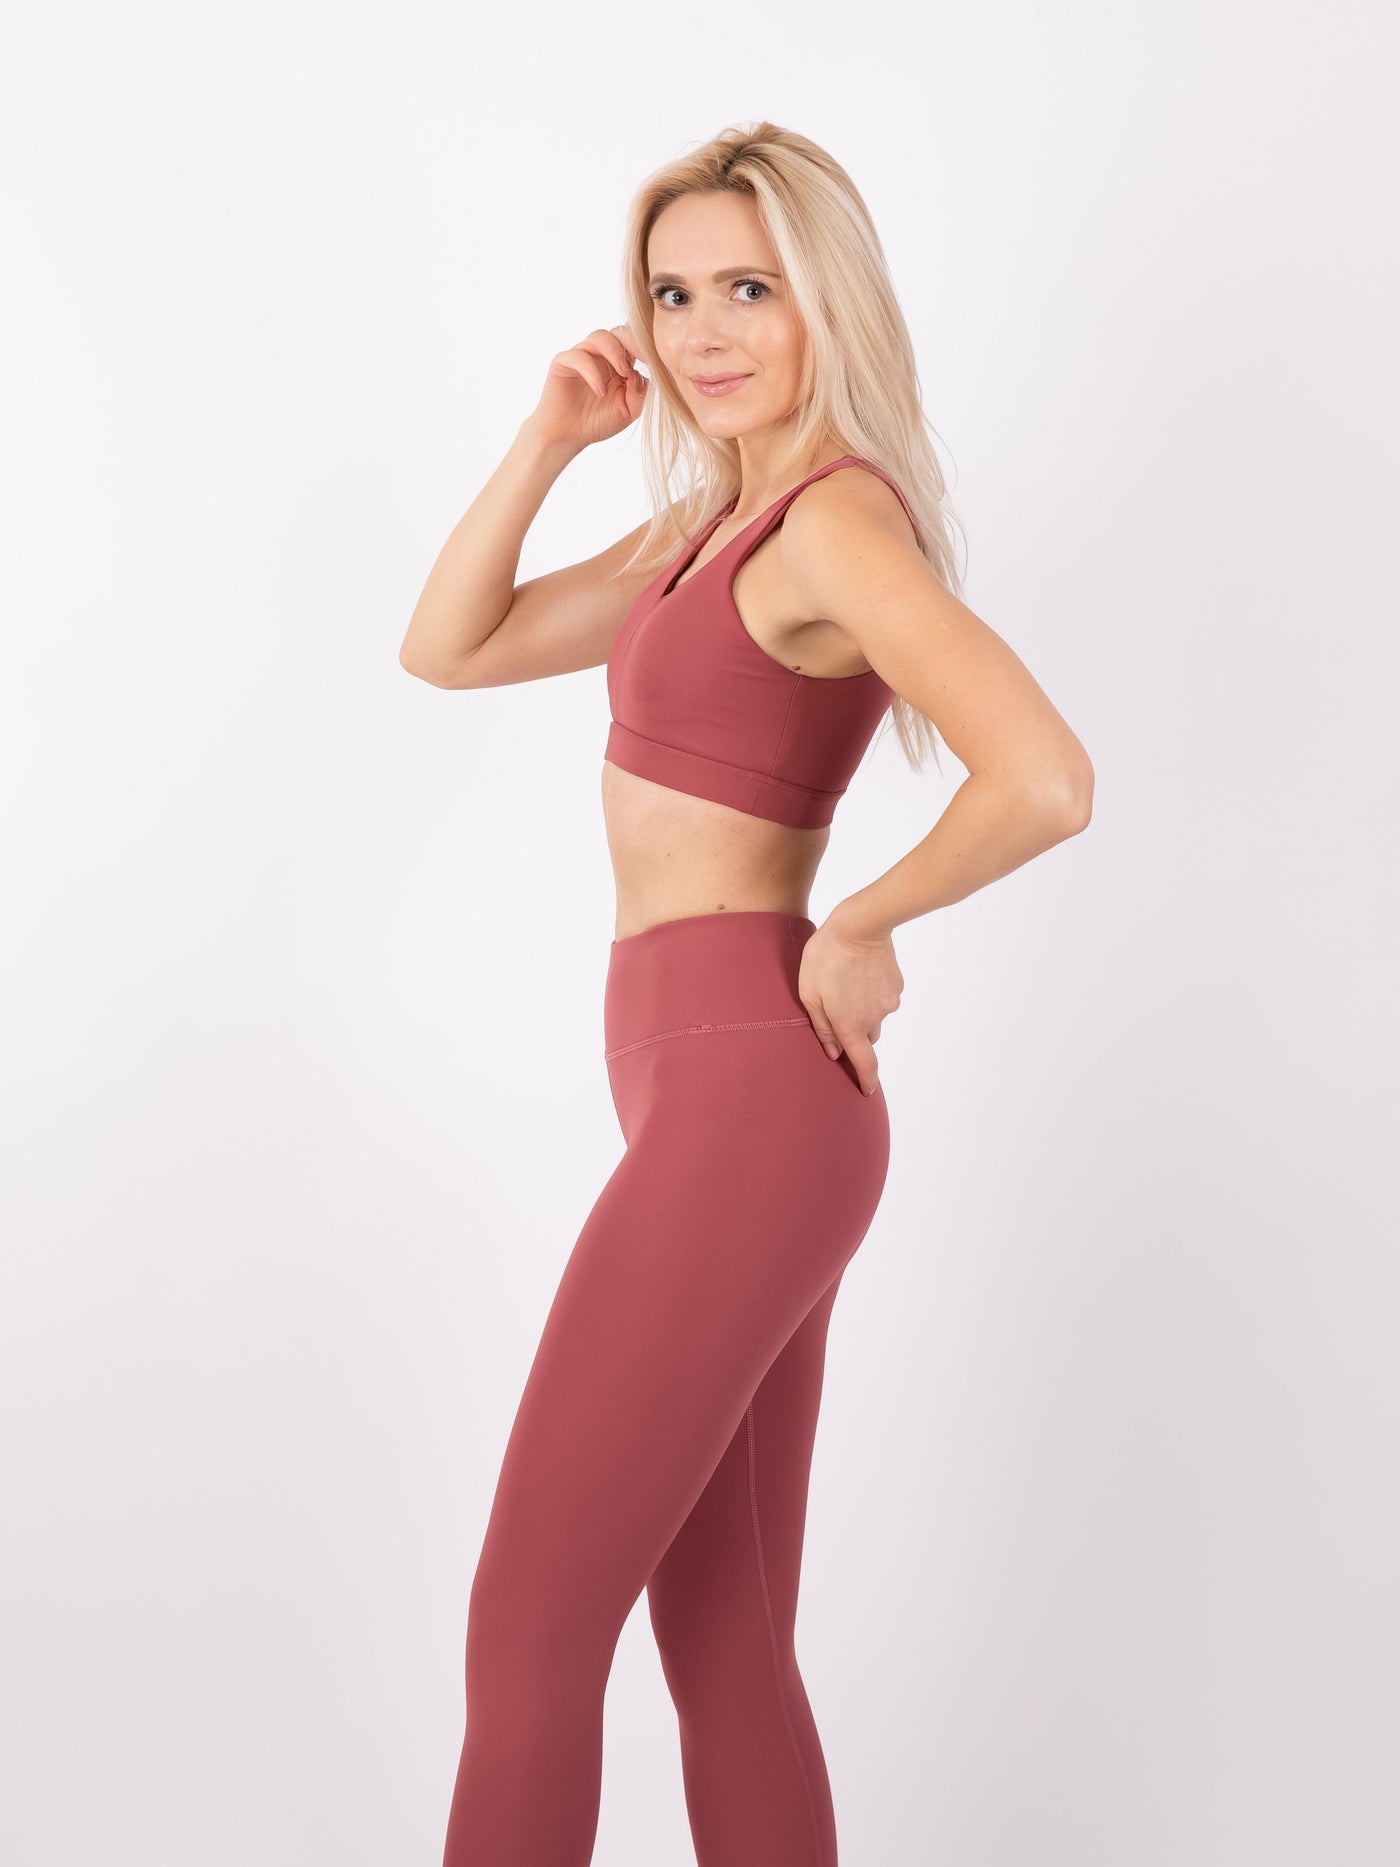 Venture Reg Legging - Shop women's workout apparel online | Leggings, hoodies, Top & bras | bejactive